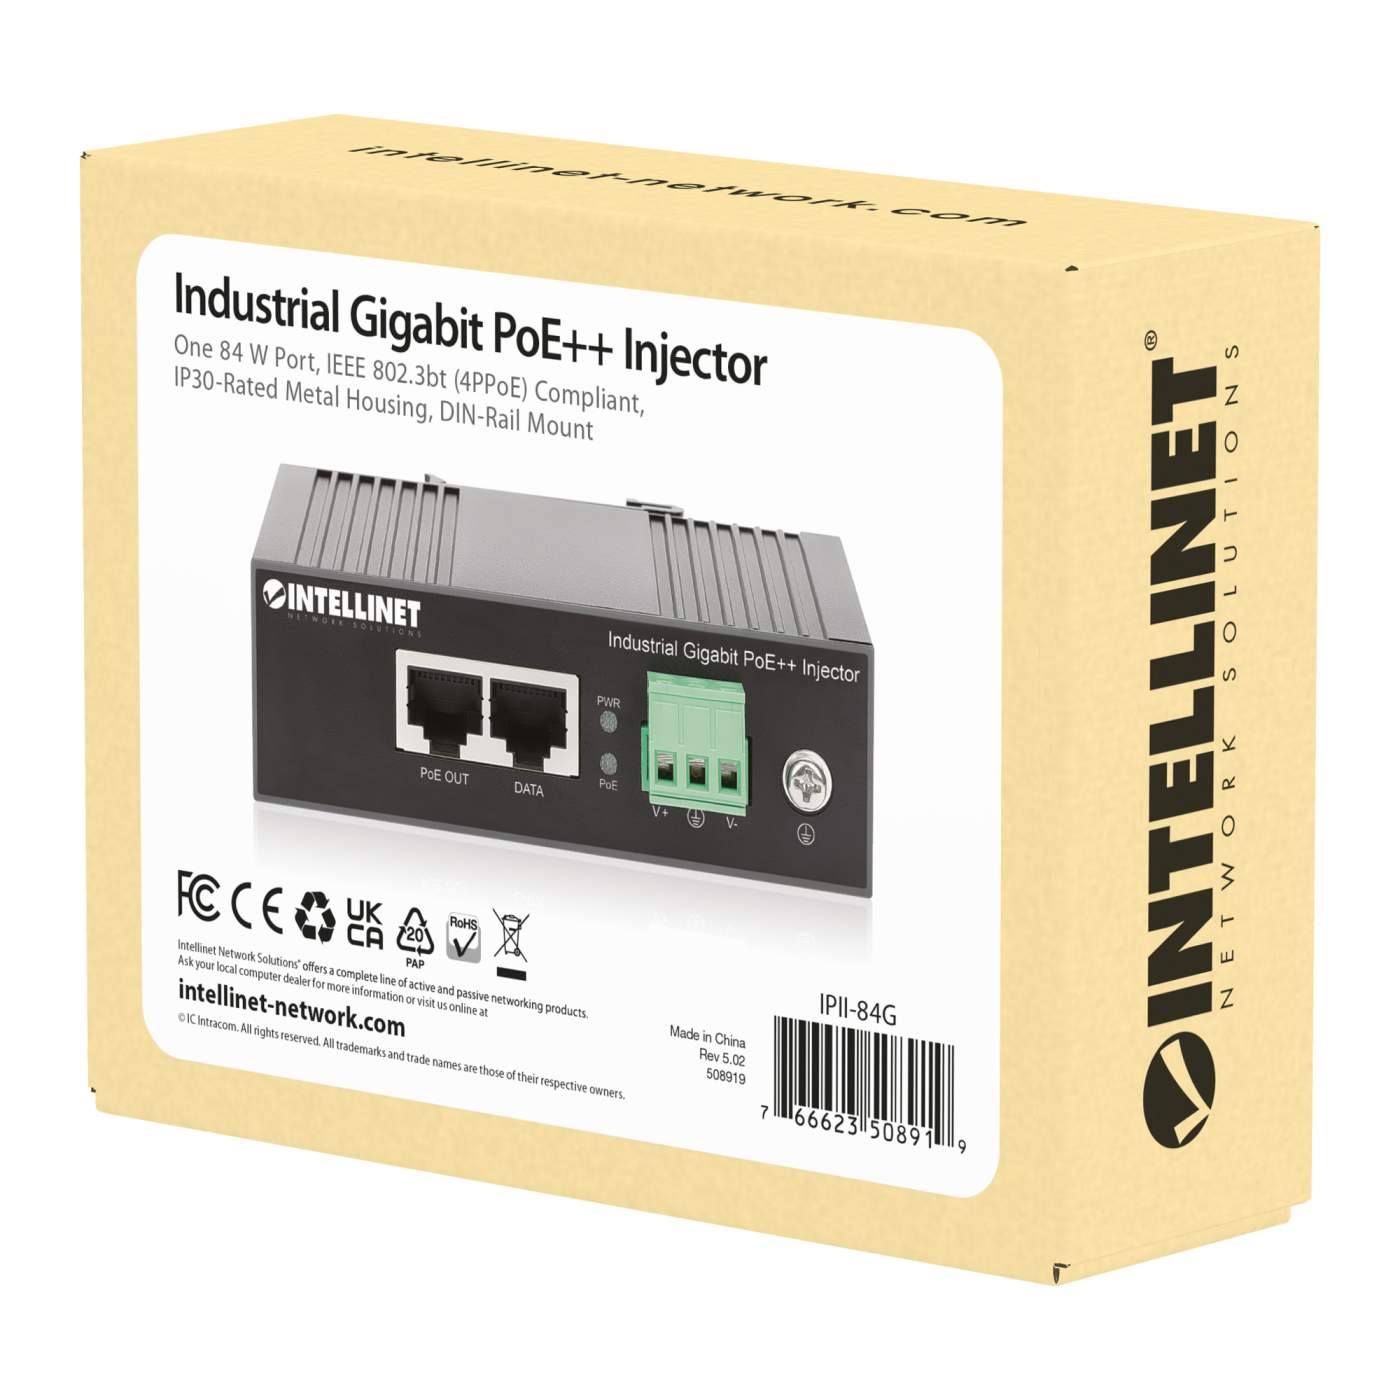 Gigabit PoE++ Injector